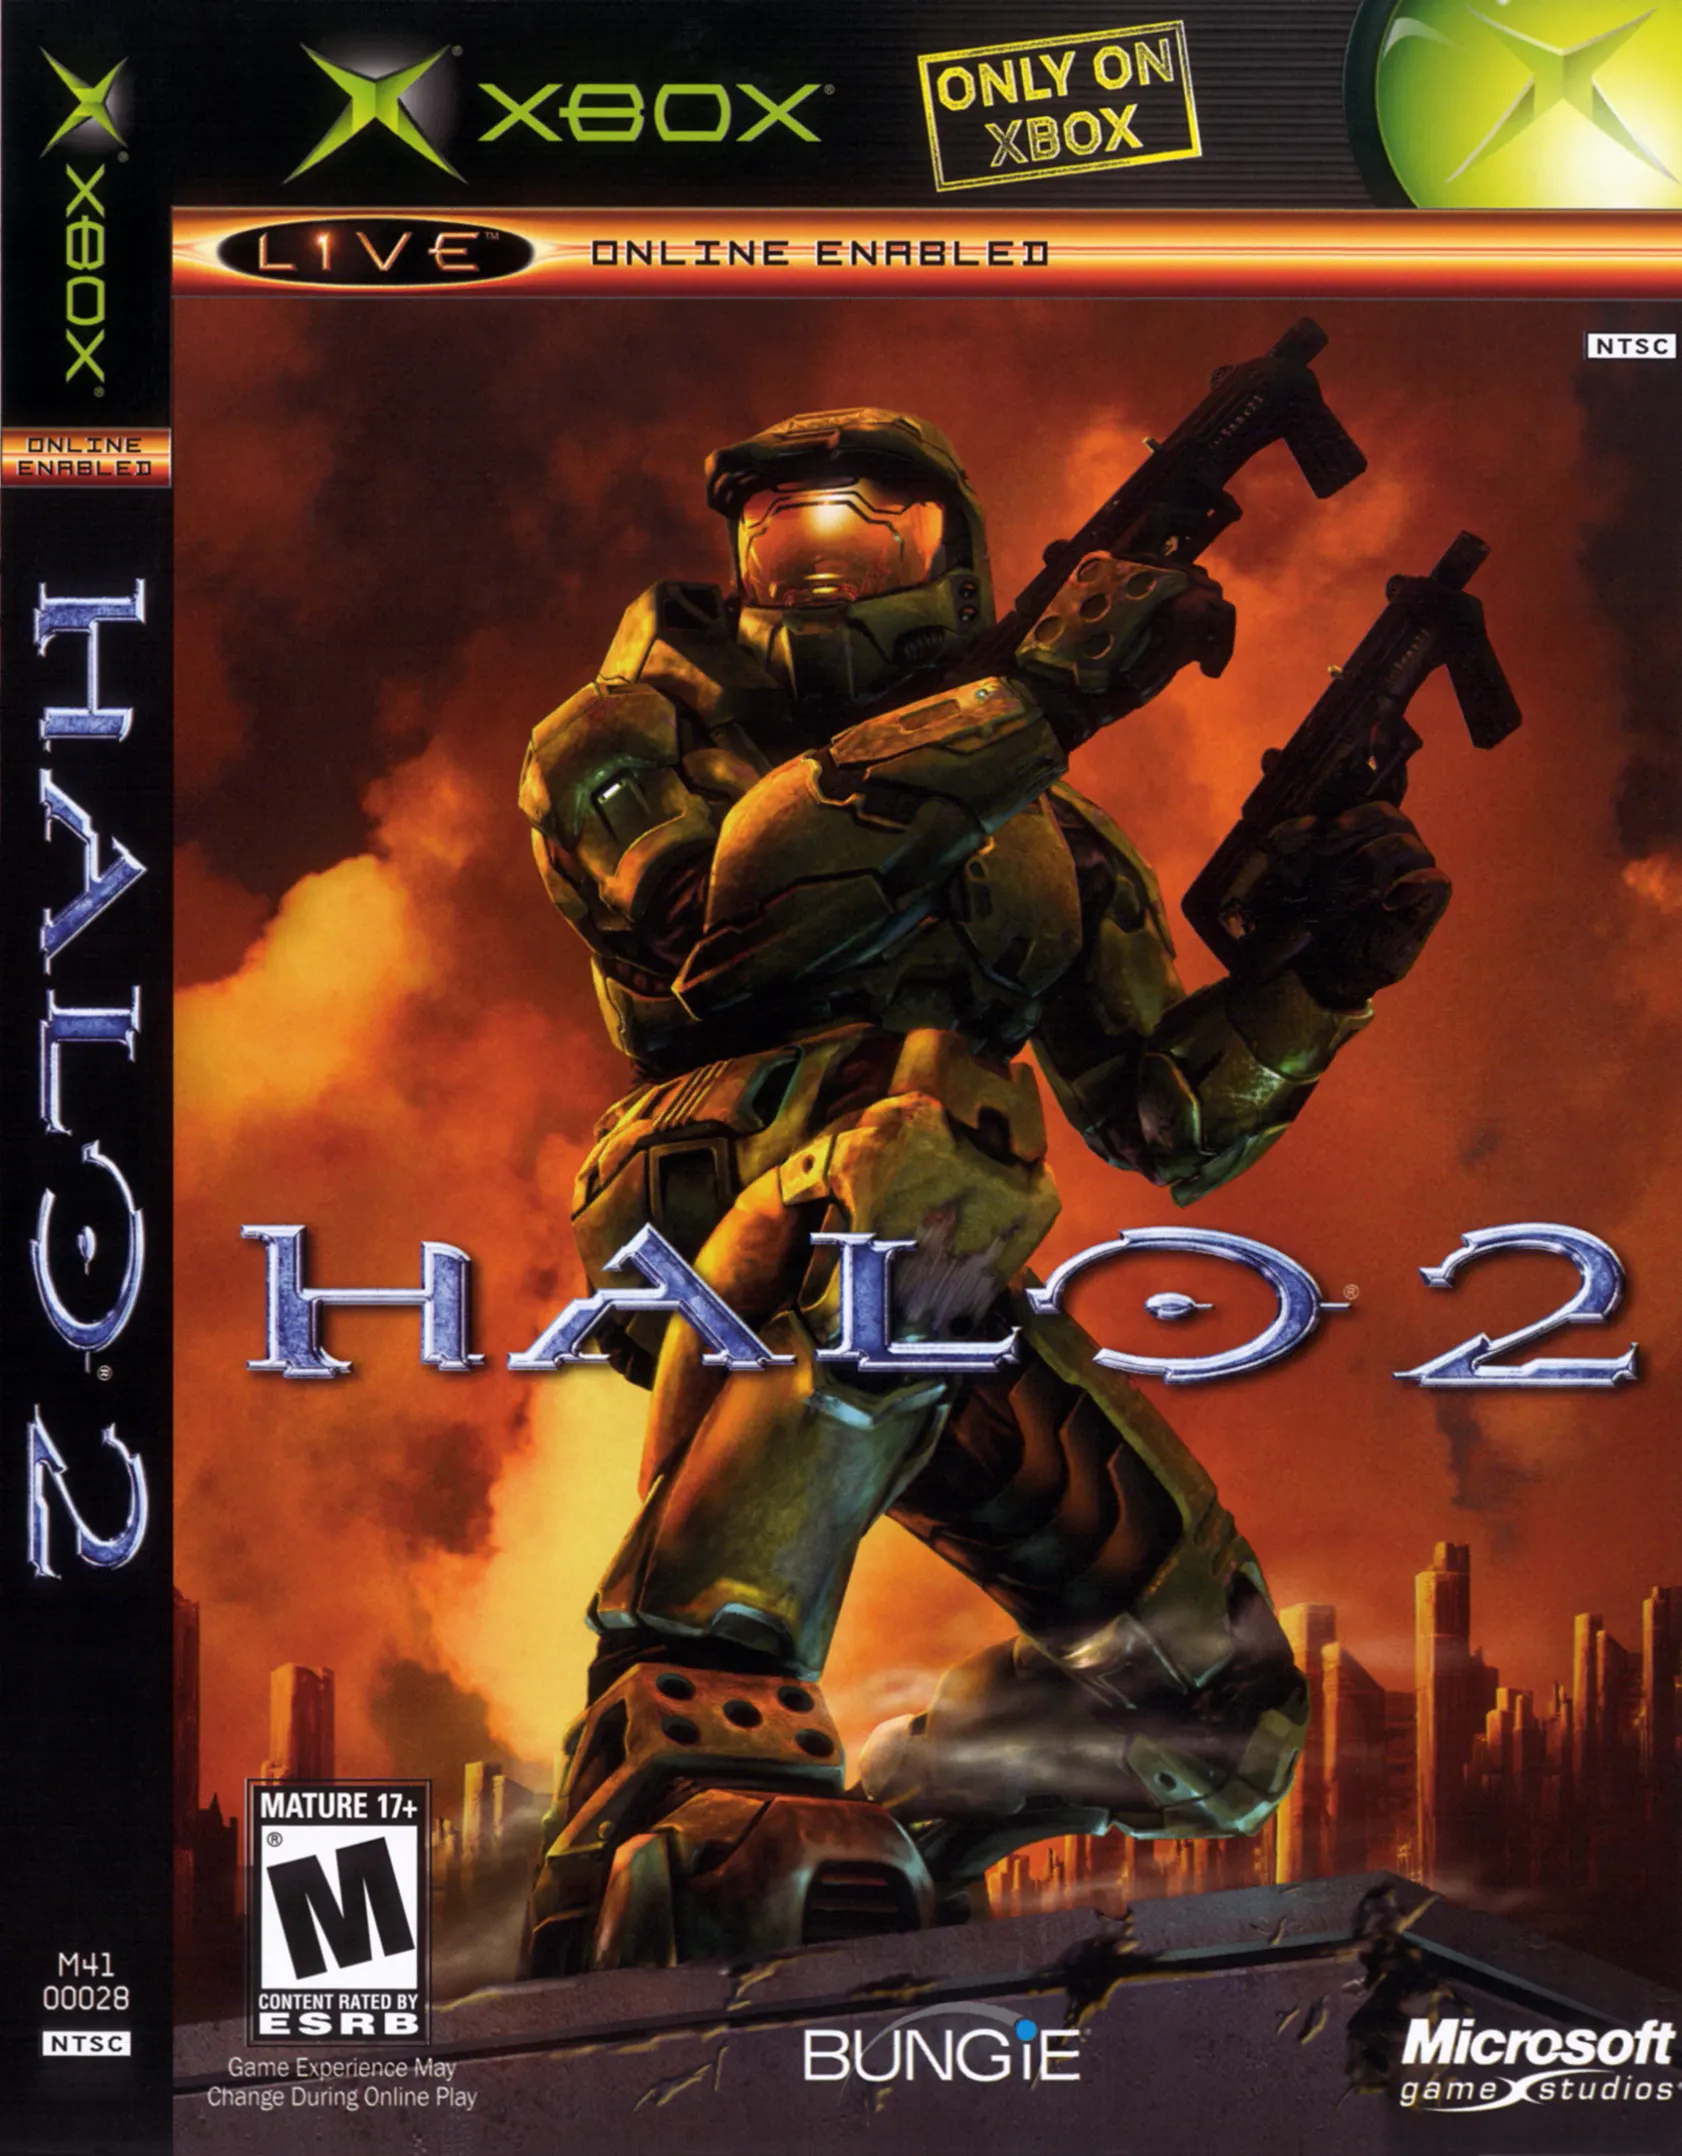 Original Xbox Game Console Halo 2 game box front.